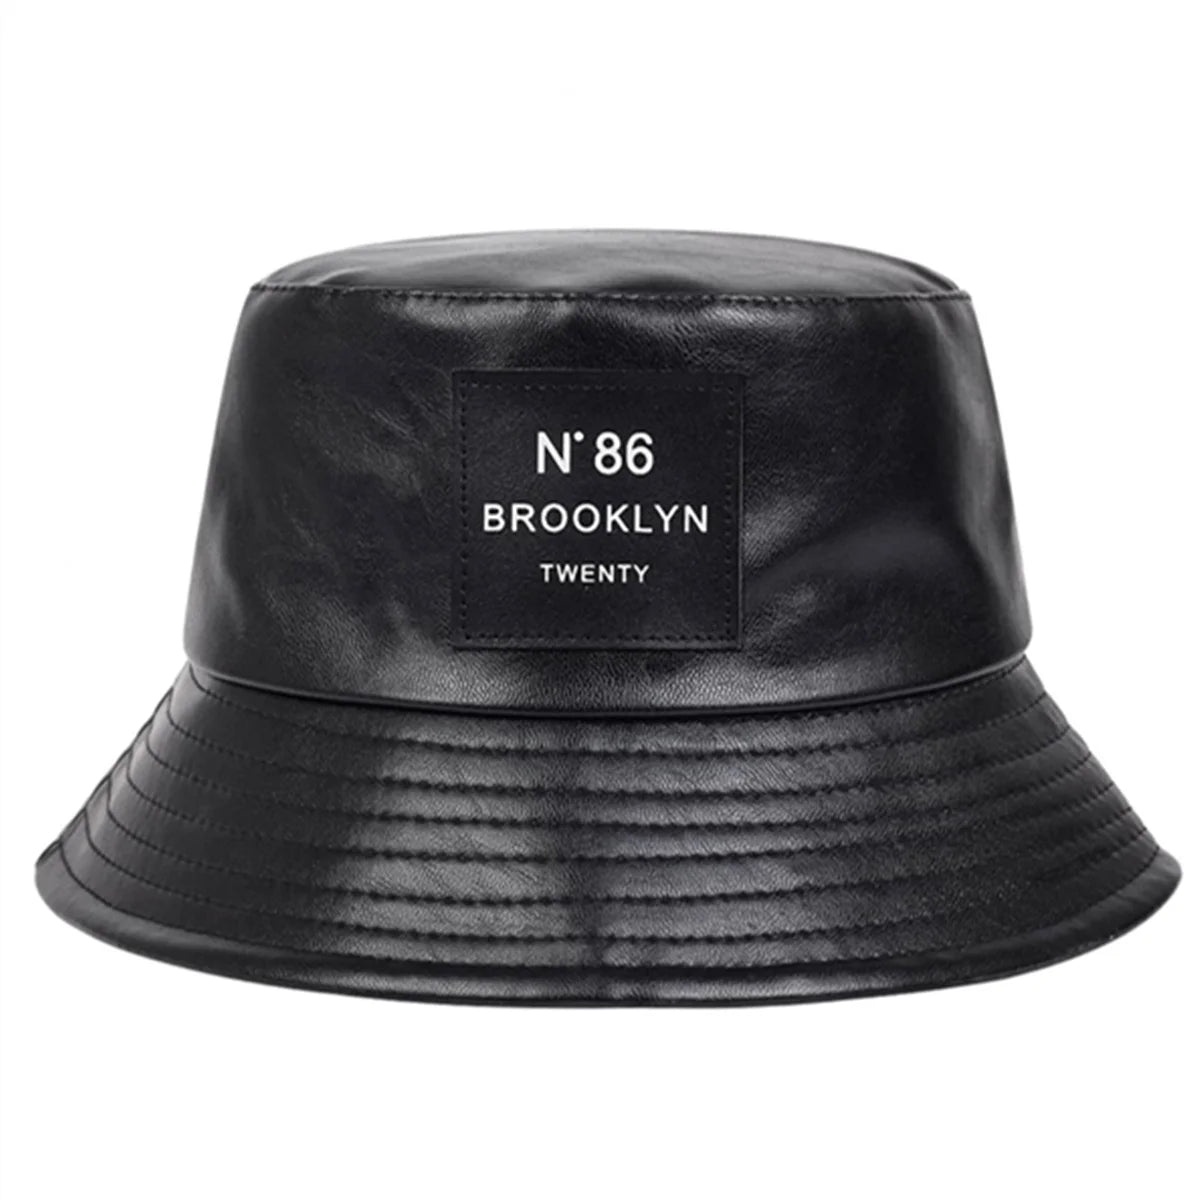 Brooklyn Bucket (leather Panama hat)